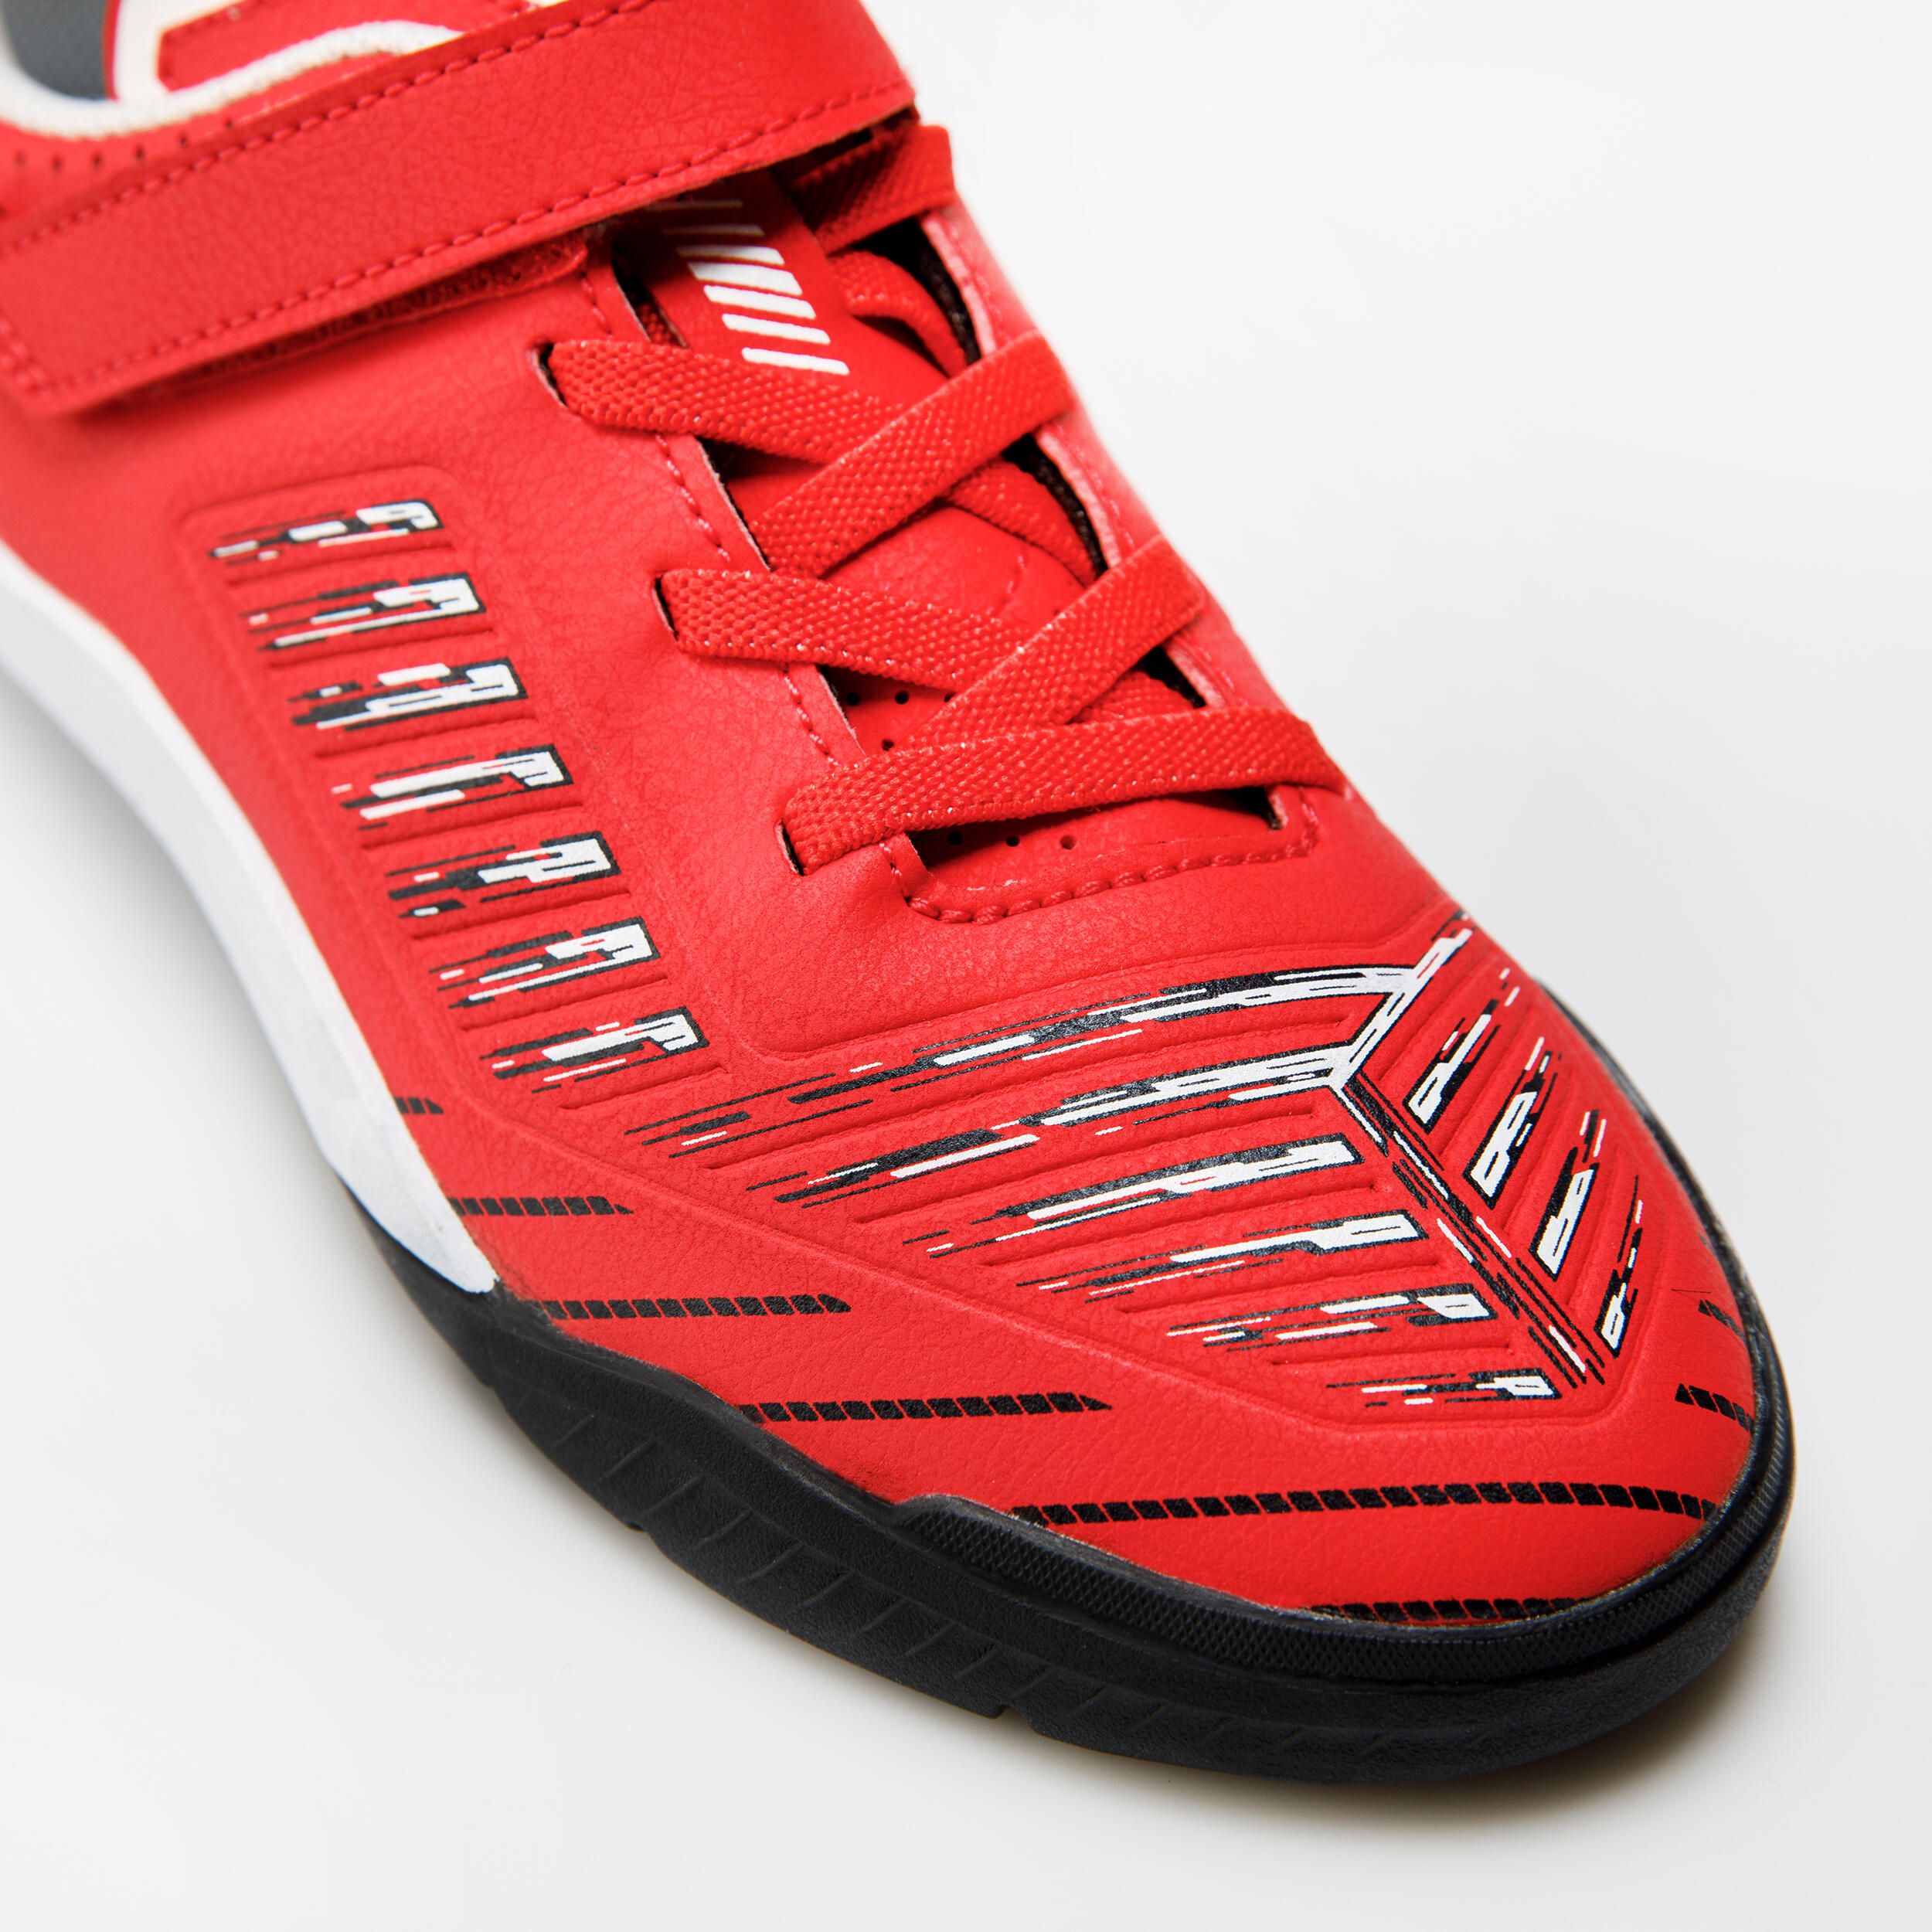 Kids' Futsal Shoes Ginka 500 - Red/Black 7/8